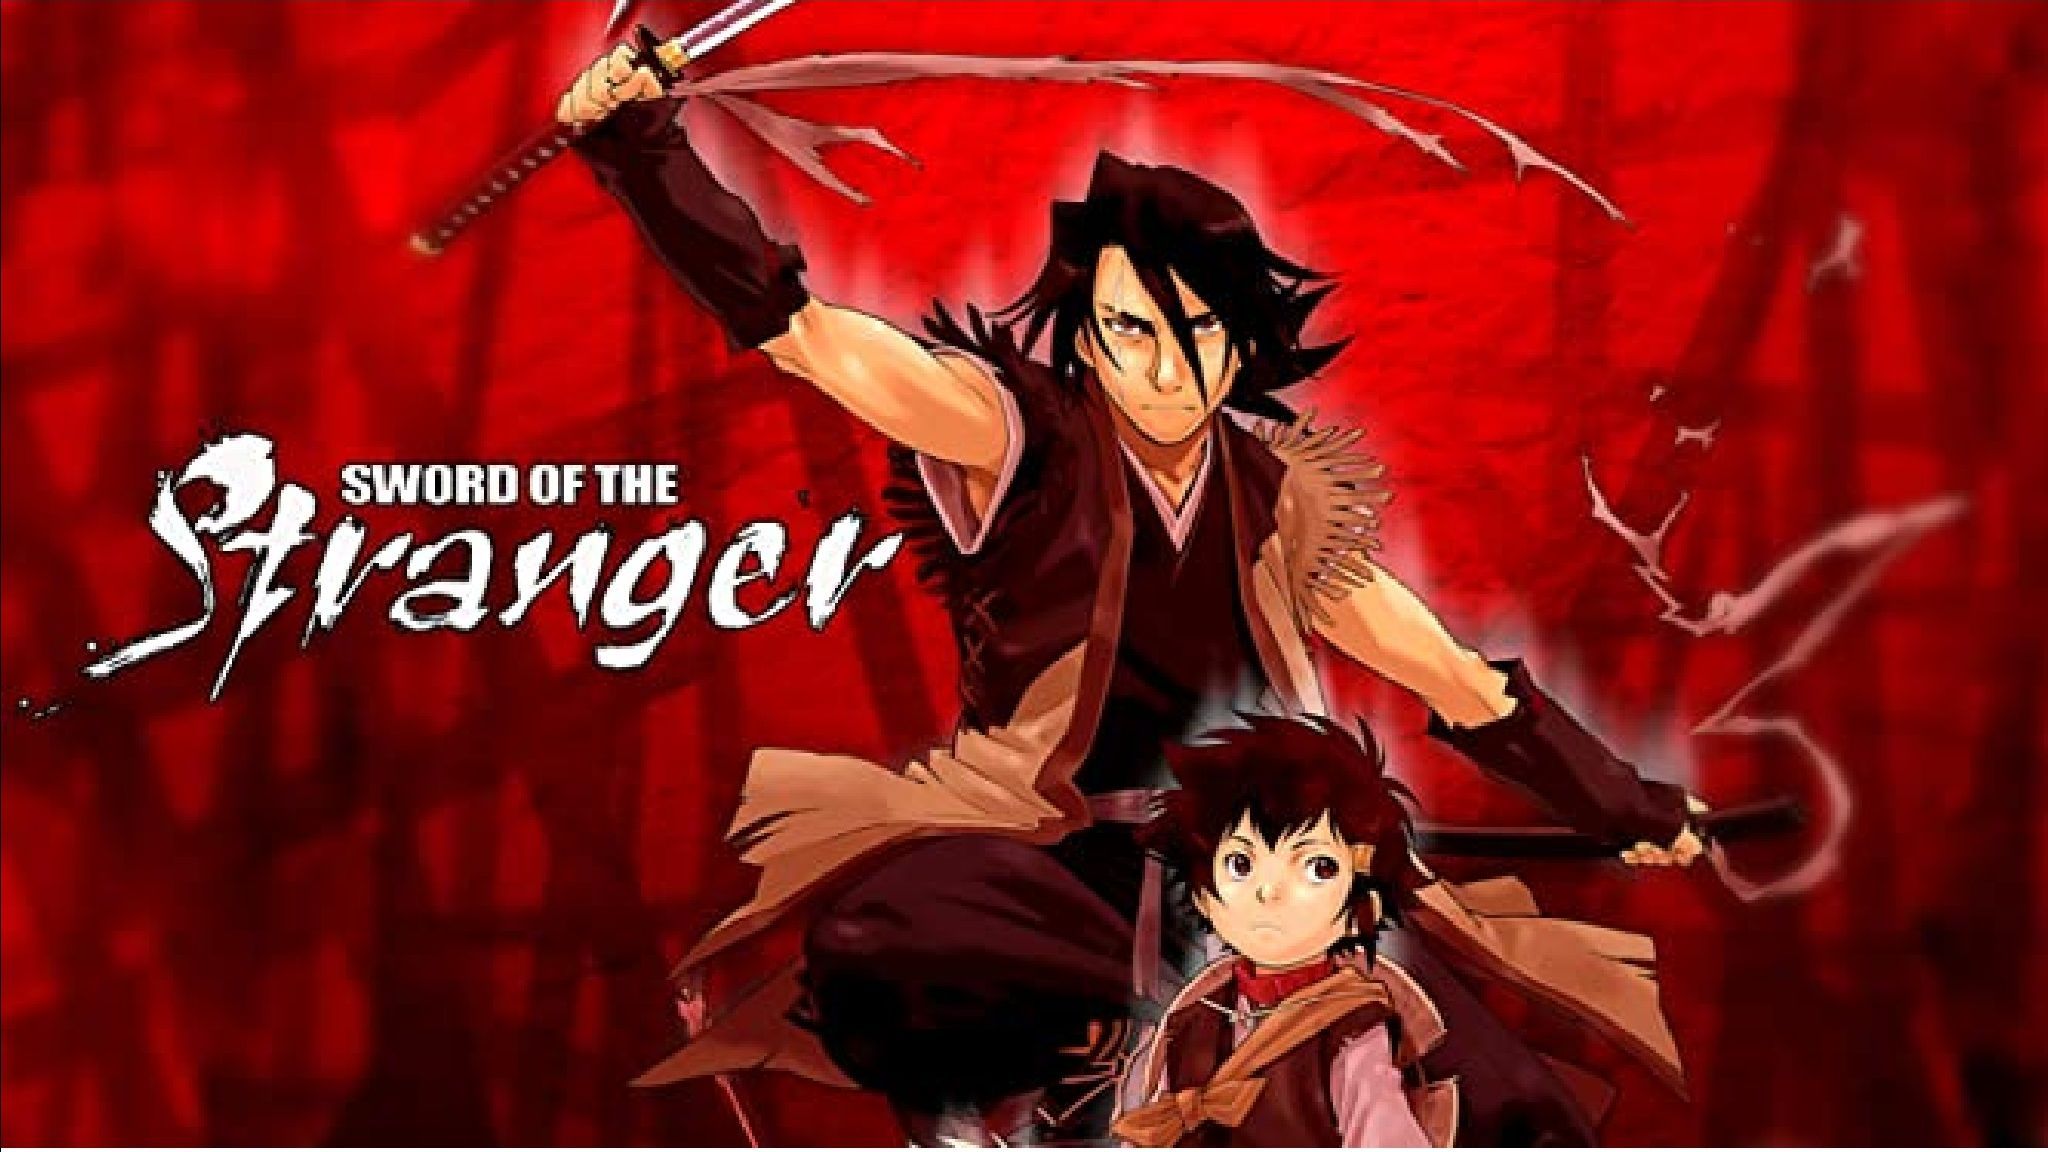 Sword of the Stranger (2007) English Sub DVD Anime All Region